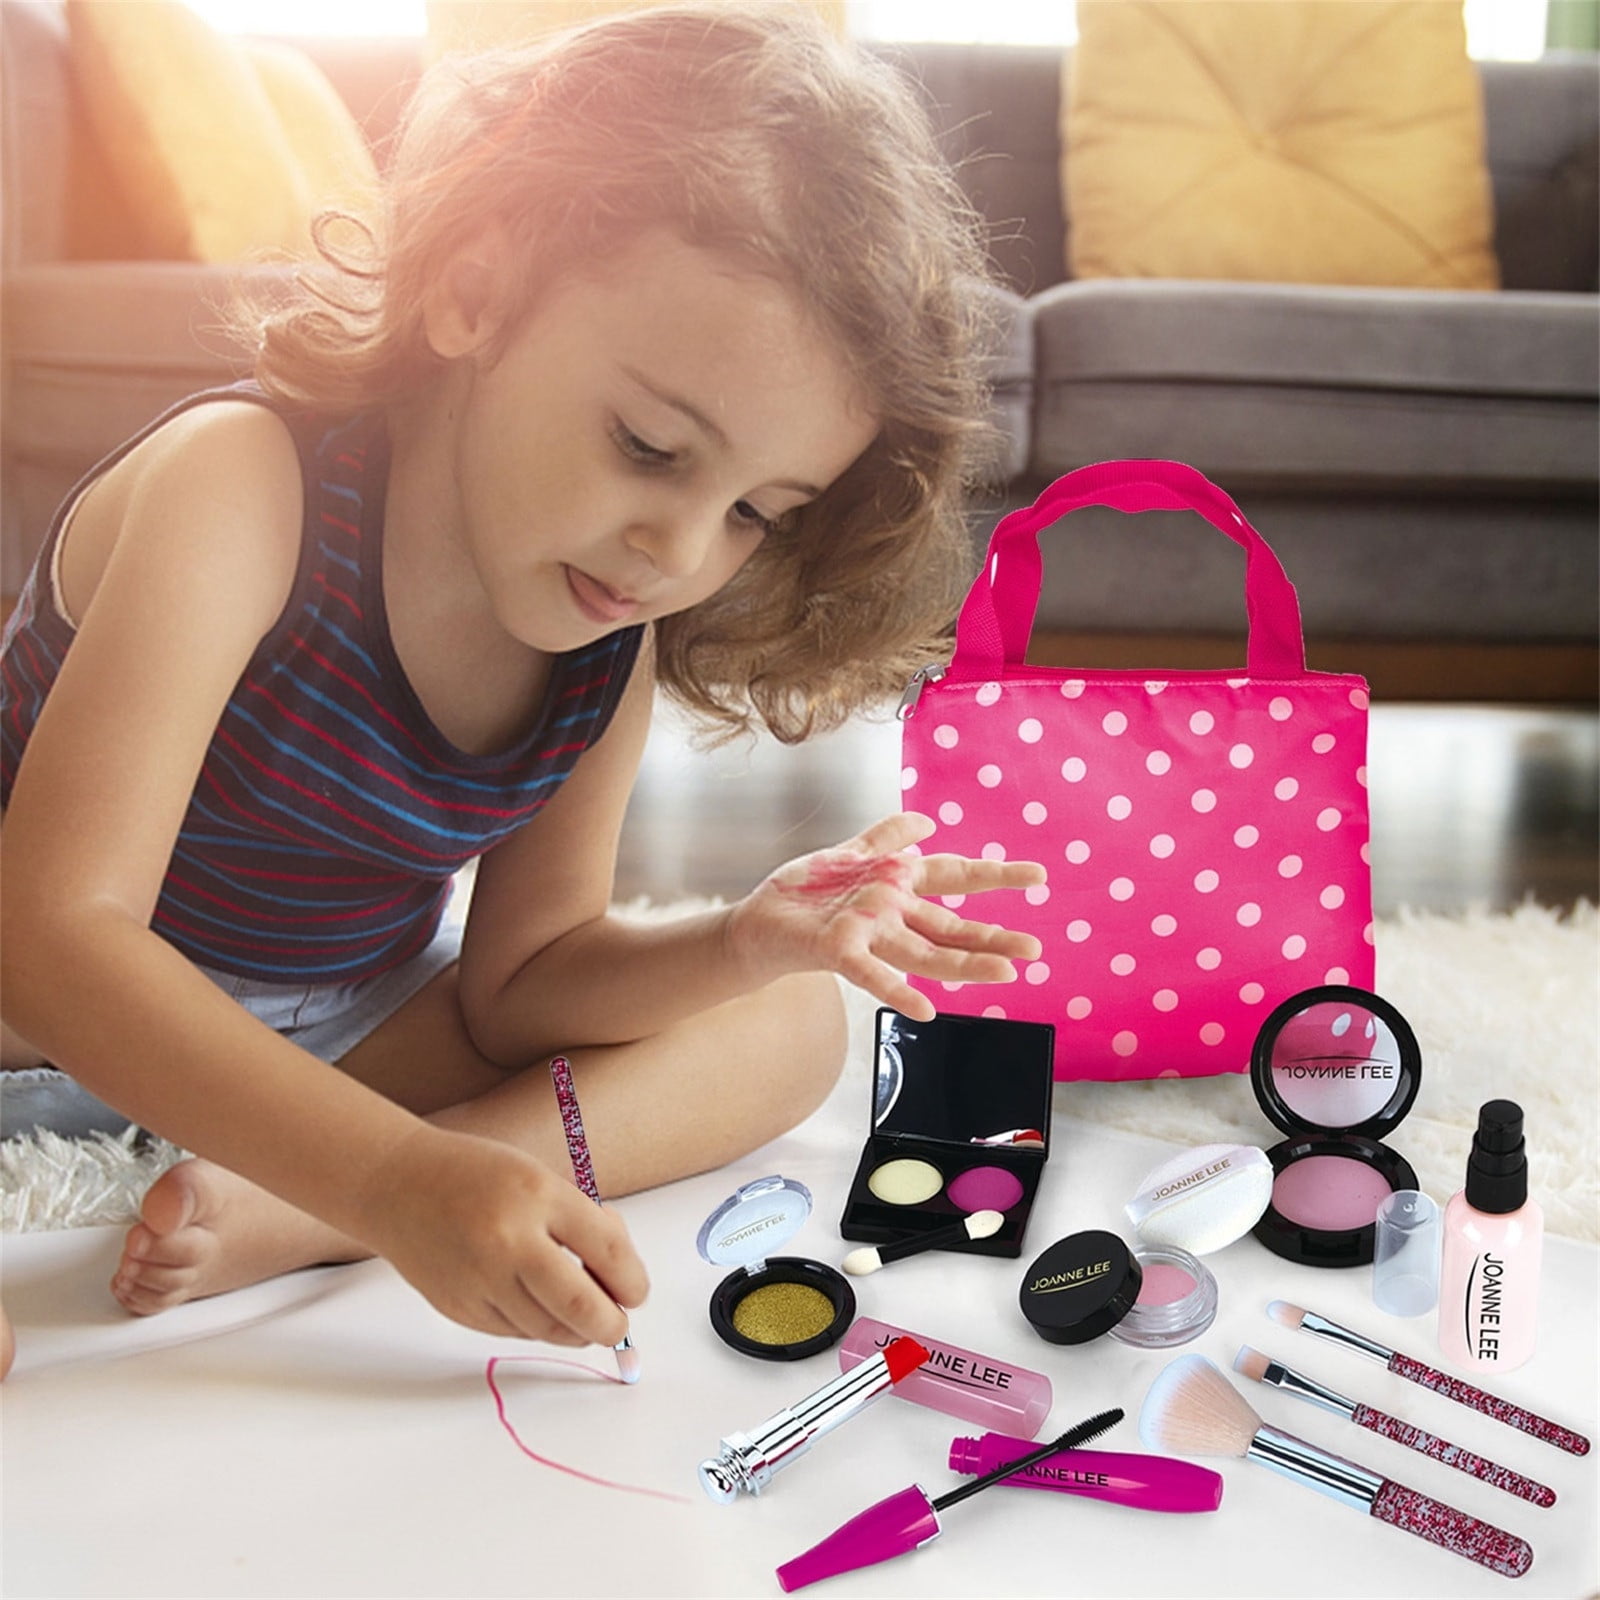 Kids Makeup Kit for Girls, Washable Girls Makeup Kit with Cosmetic Case,  Real Kids Girls Makeup Pretend Play Makeup Set Toy Makeup Kids Little Girls